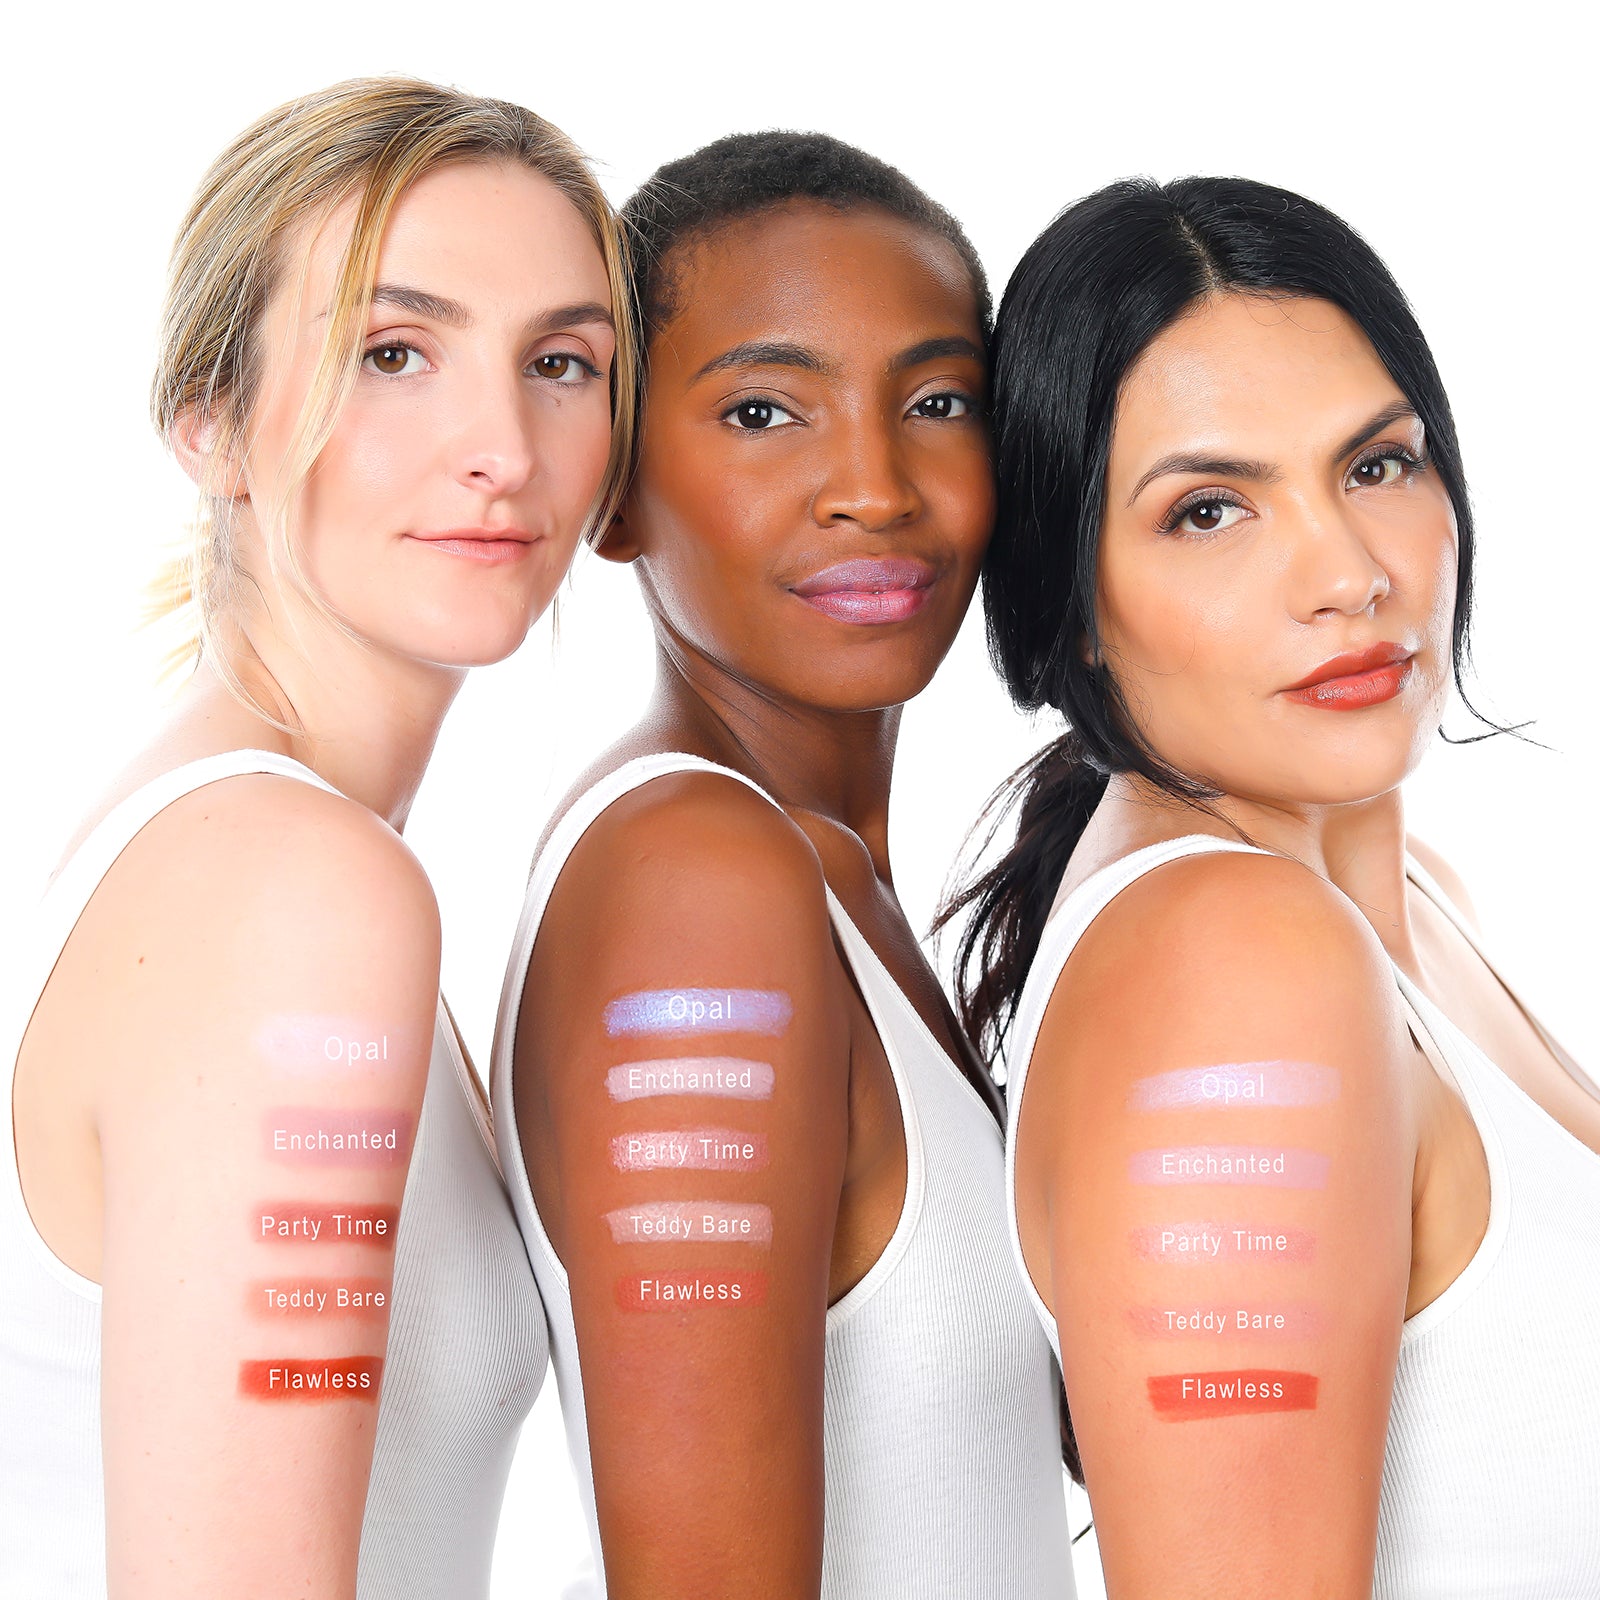 Lique Teddy Bare Cream Lipstick Arm Swatches on Three Women